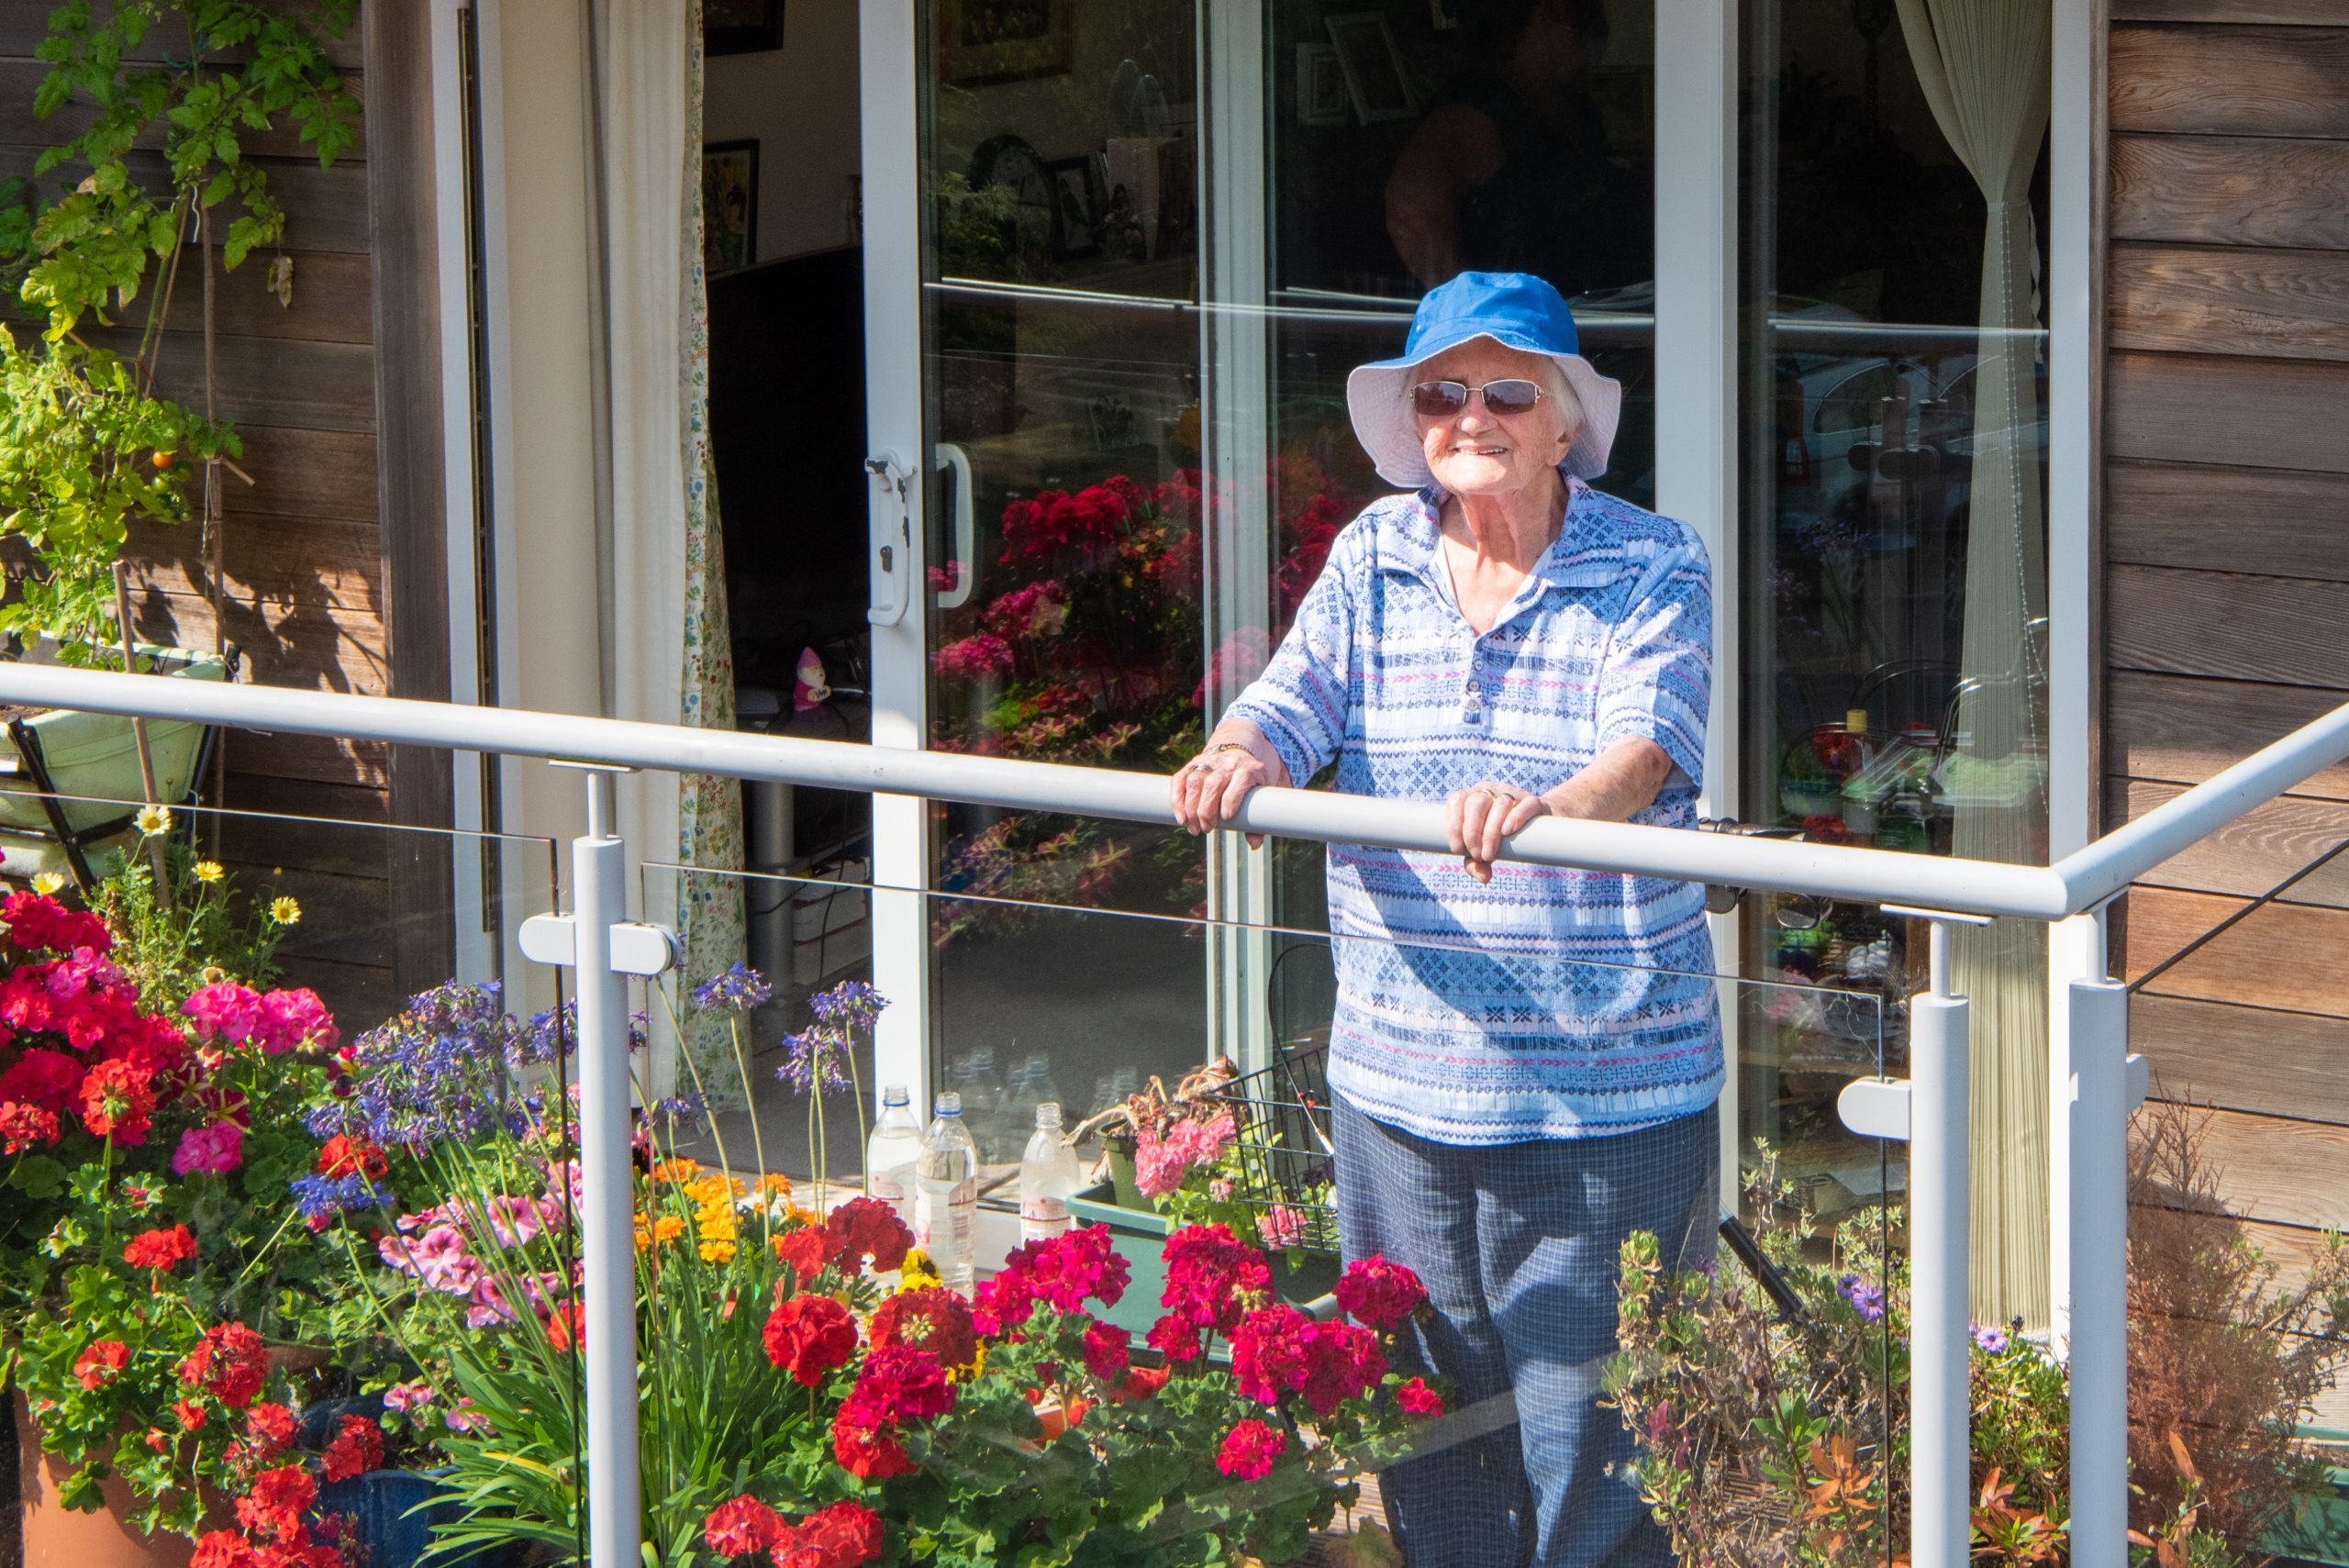 Knightwood resident stood on balcony amongst flowers